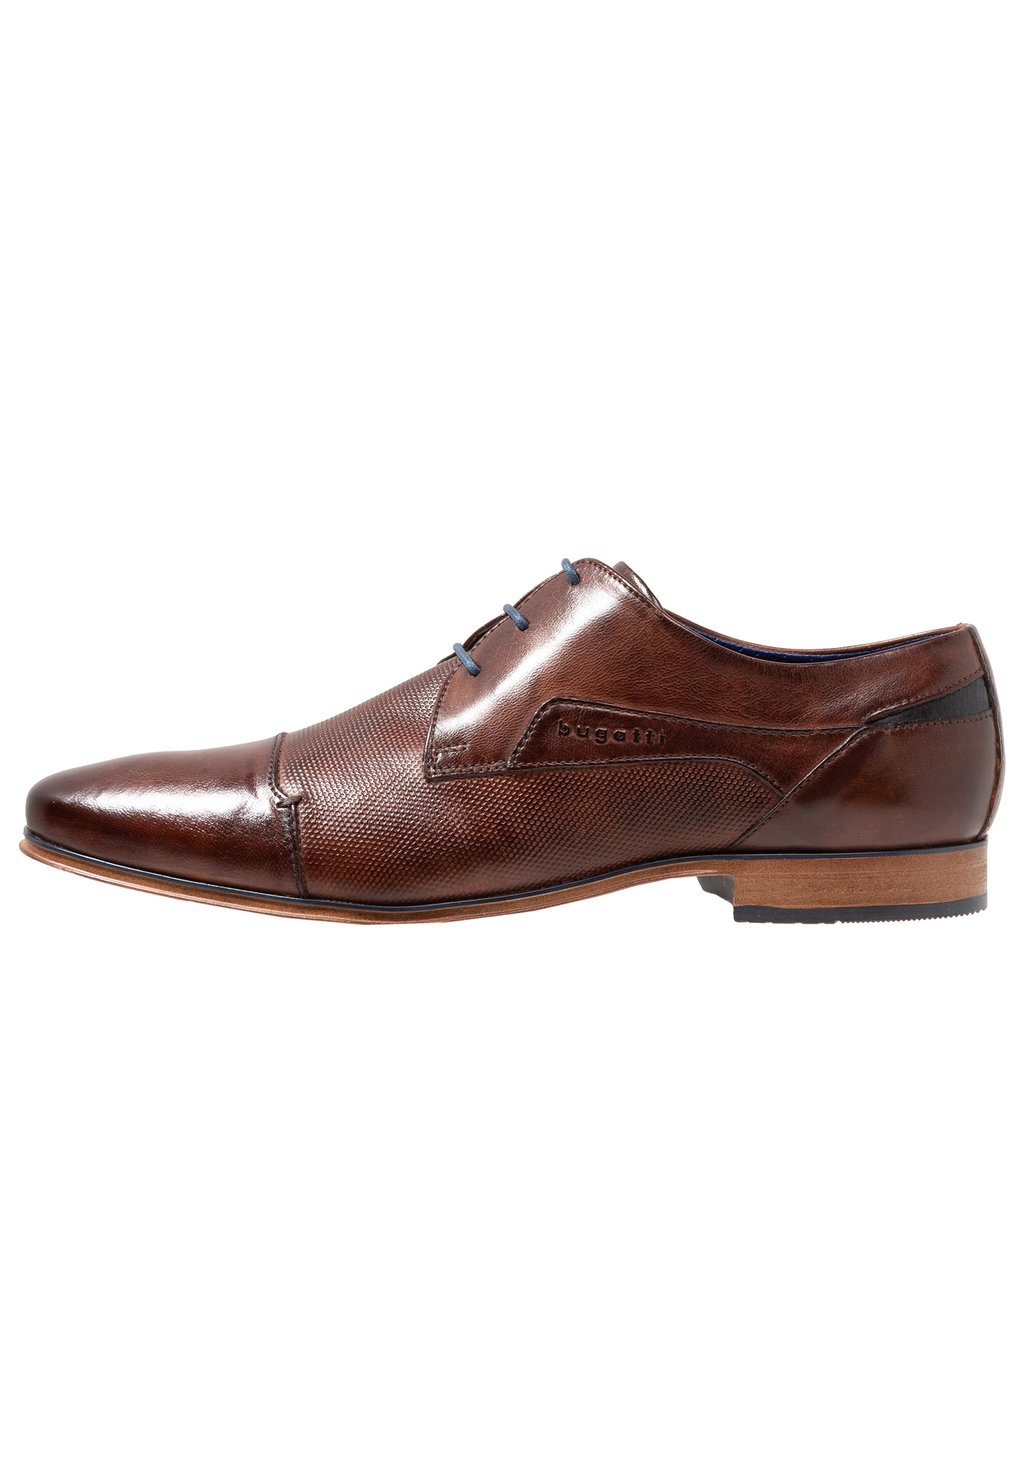 Элегантные туфли на шнуровке MORINO bugatti, коричневый